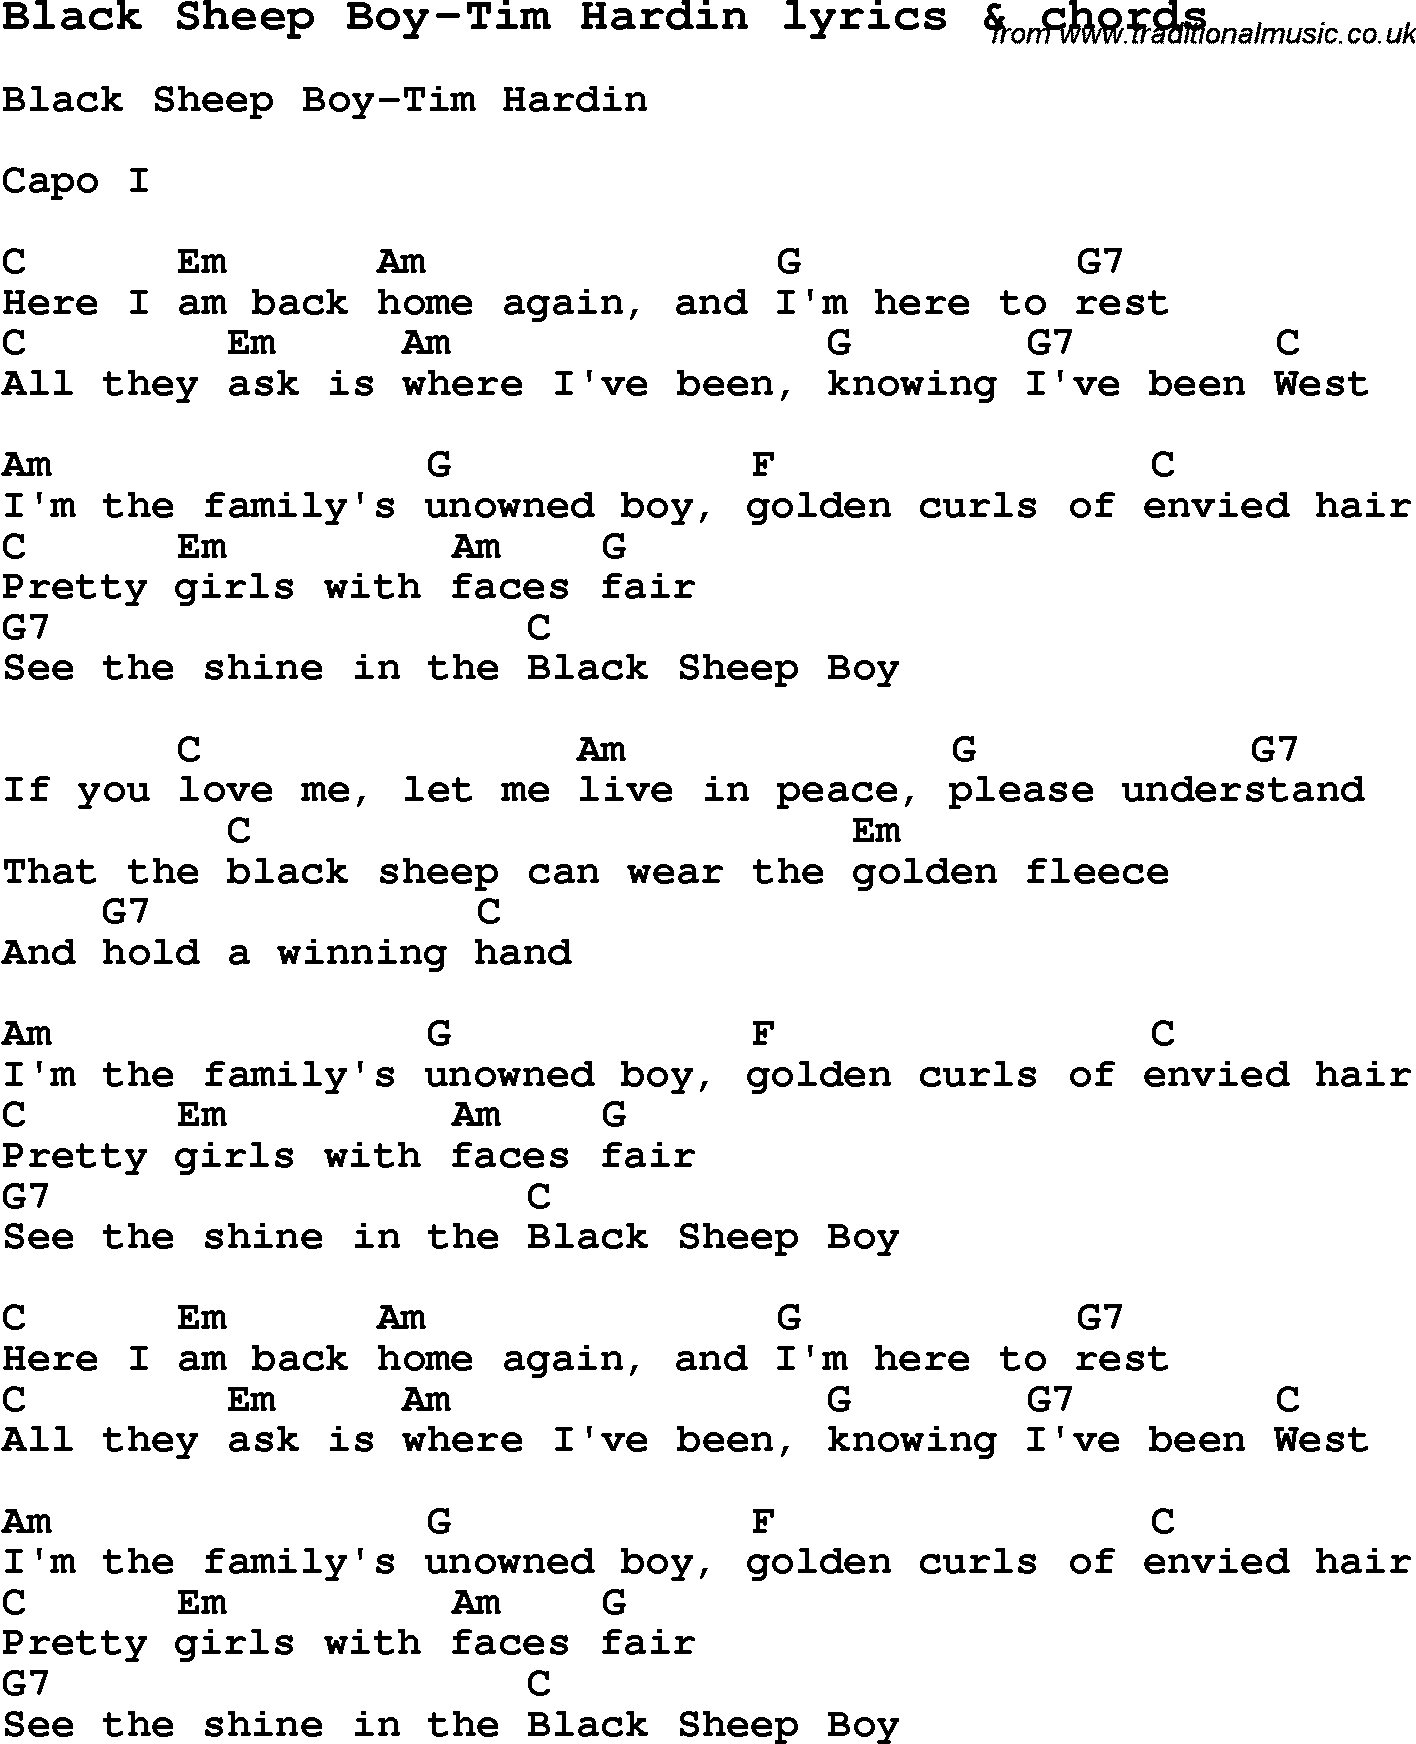 Love Song Lyrics for: Black Sheep Boy-Tim Hardin with chords for Ukulele, Guitar Banjo etc.